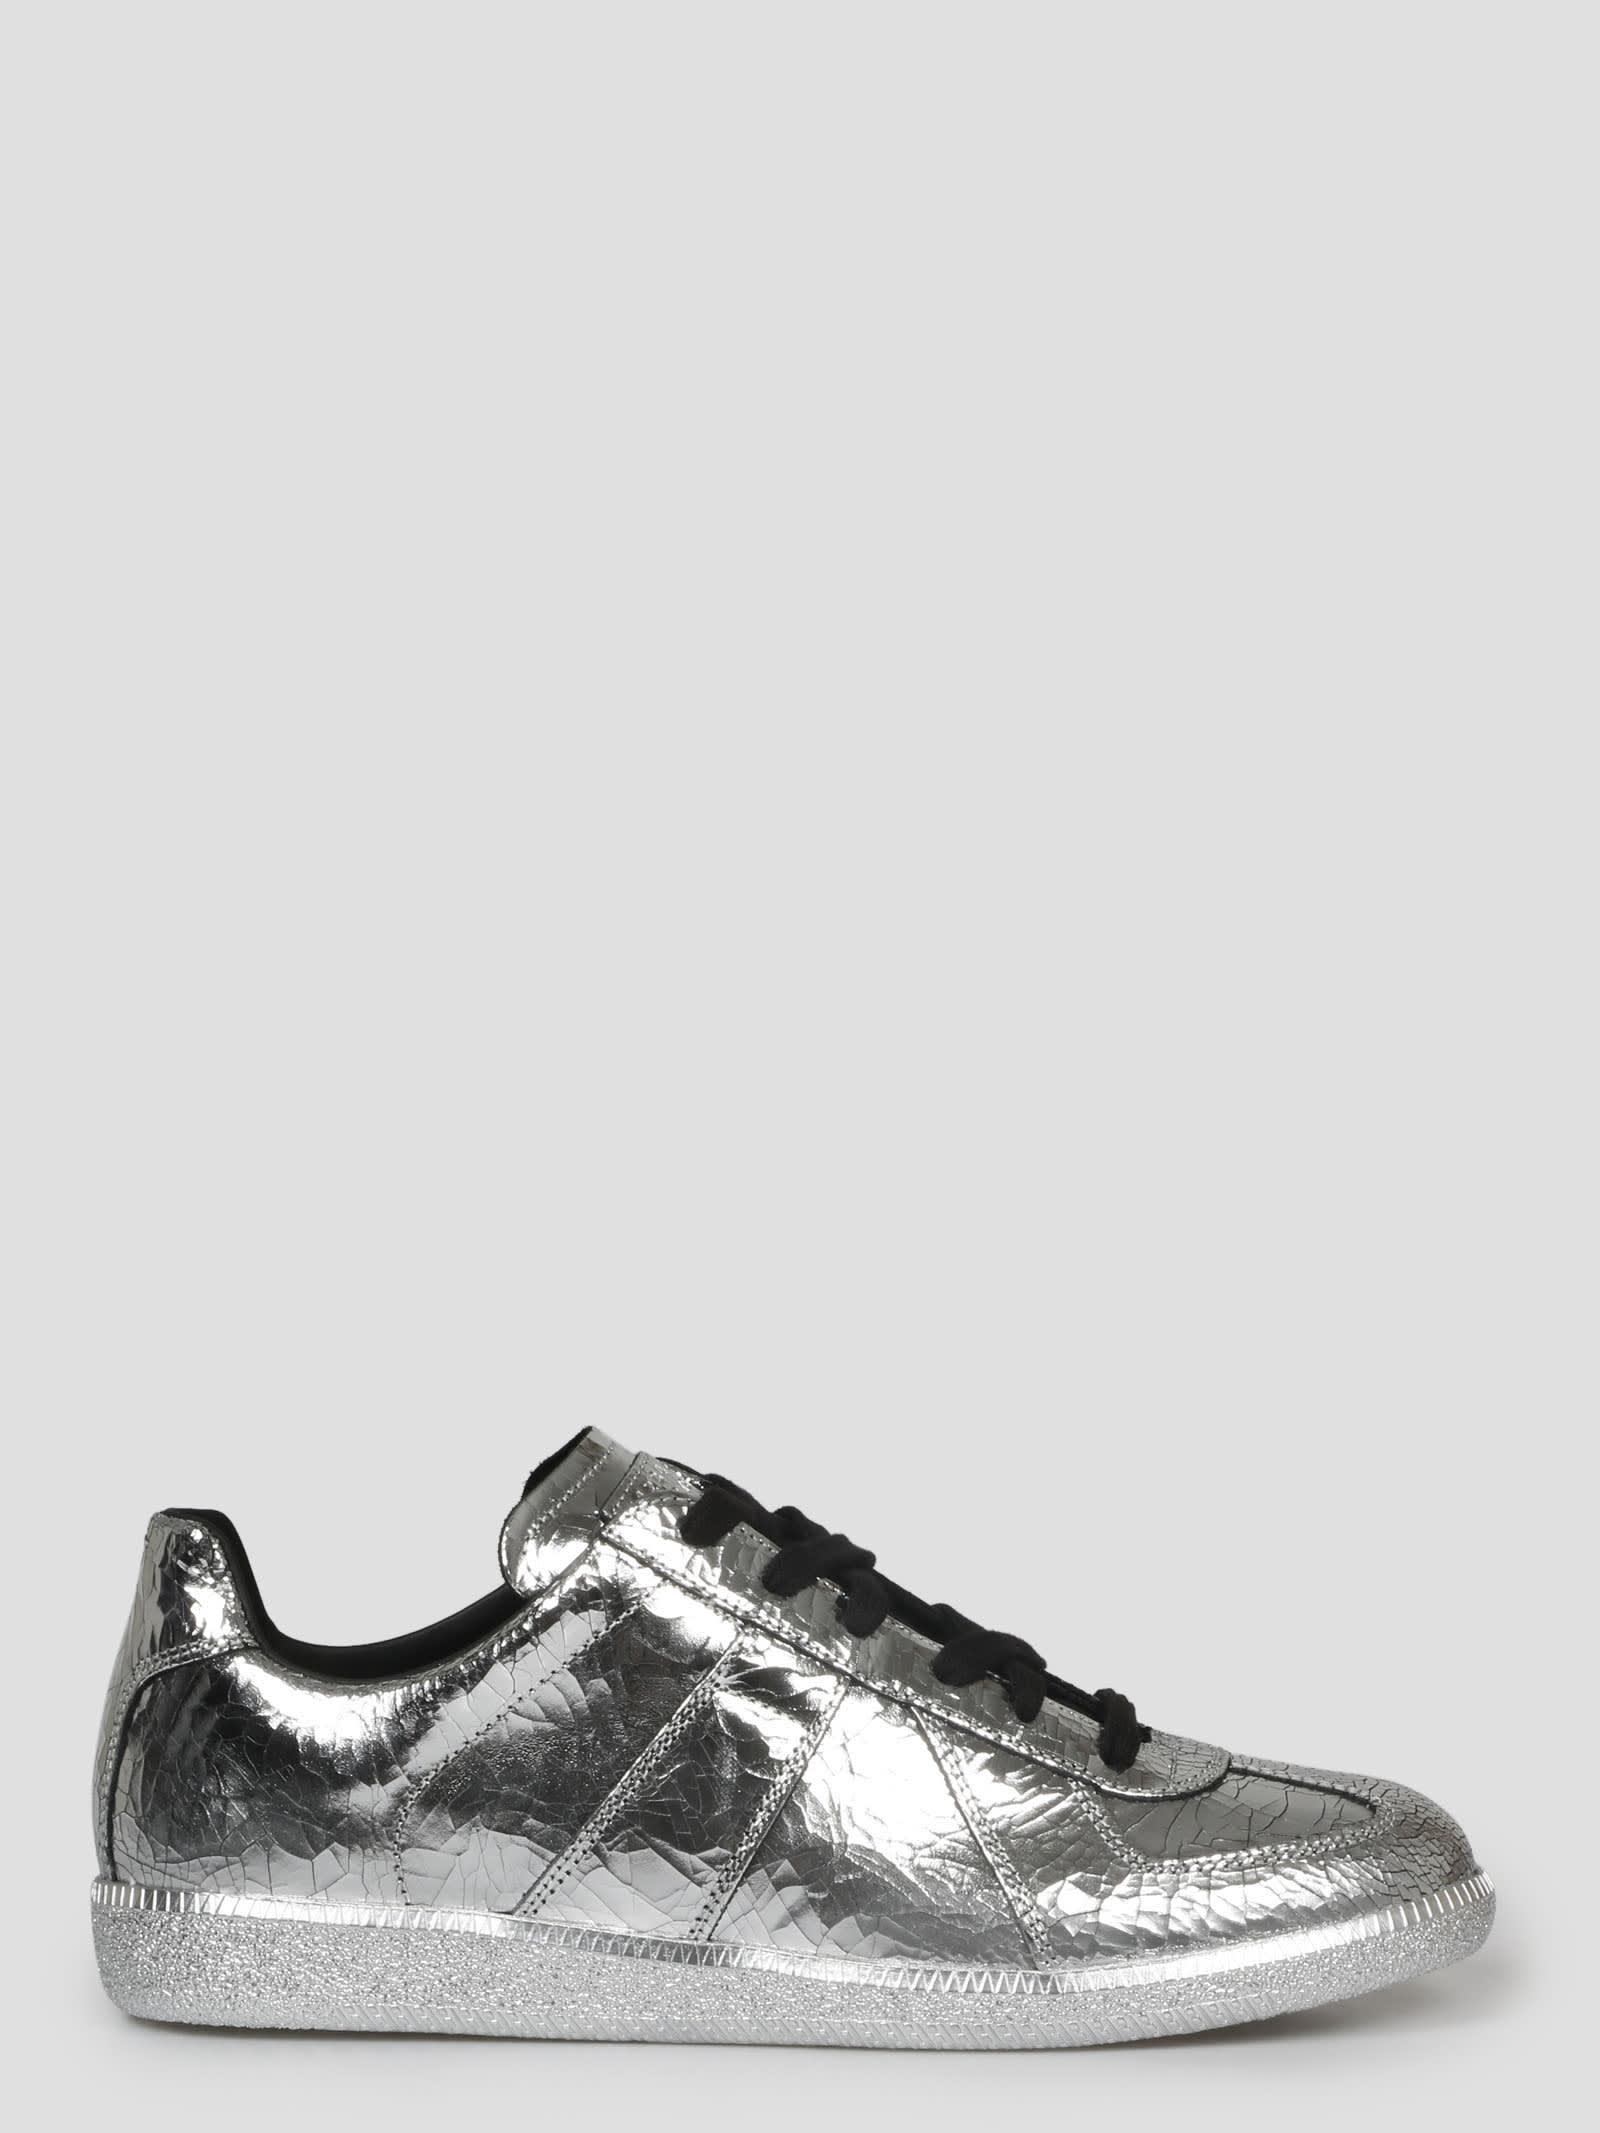 Maison Margiela Replica Broken Mirror Sneakers in Metallic | Lyst